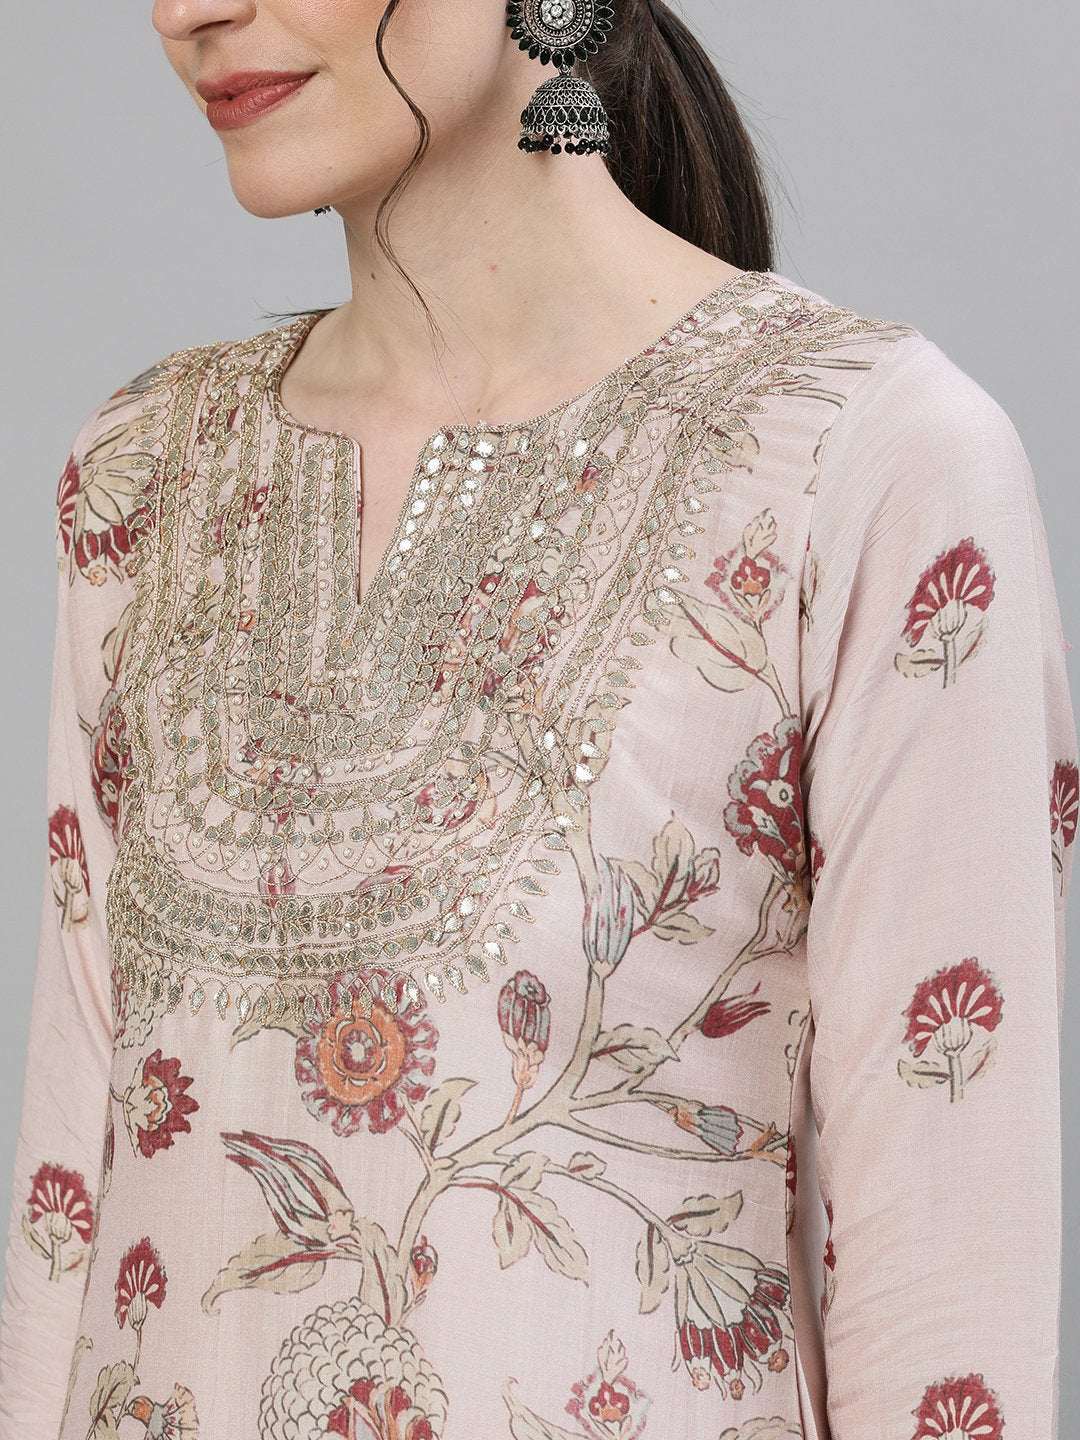 Ishin Women's Silk Pink & Mauve Embellished Straight Kurta Sharara Dupatta Set